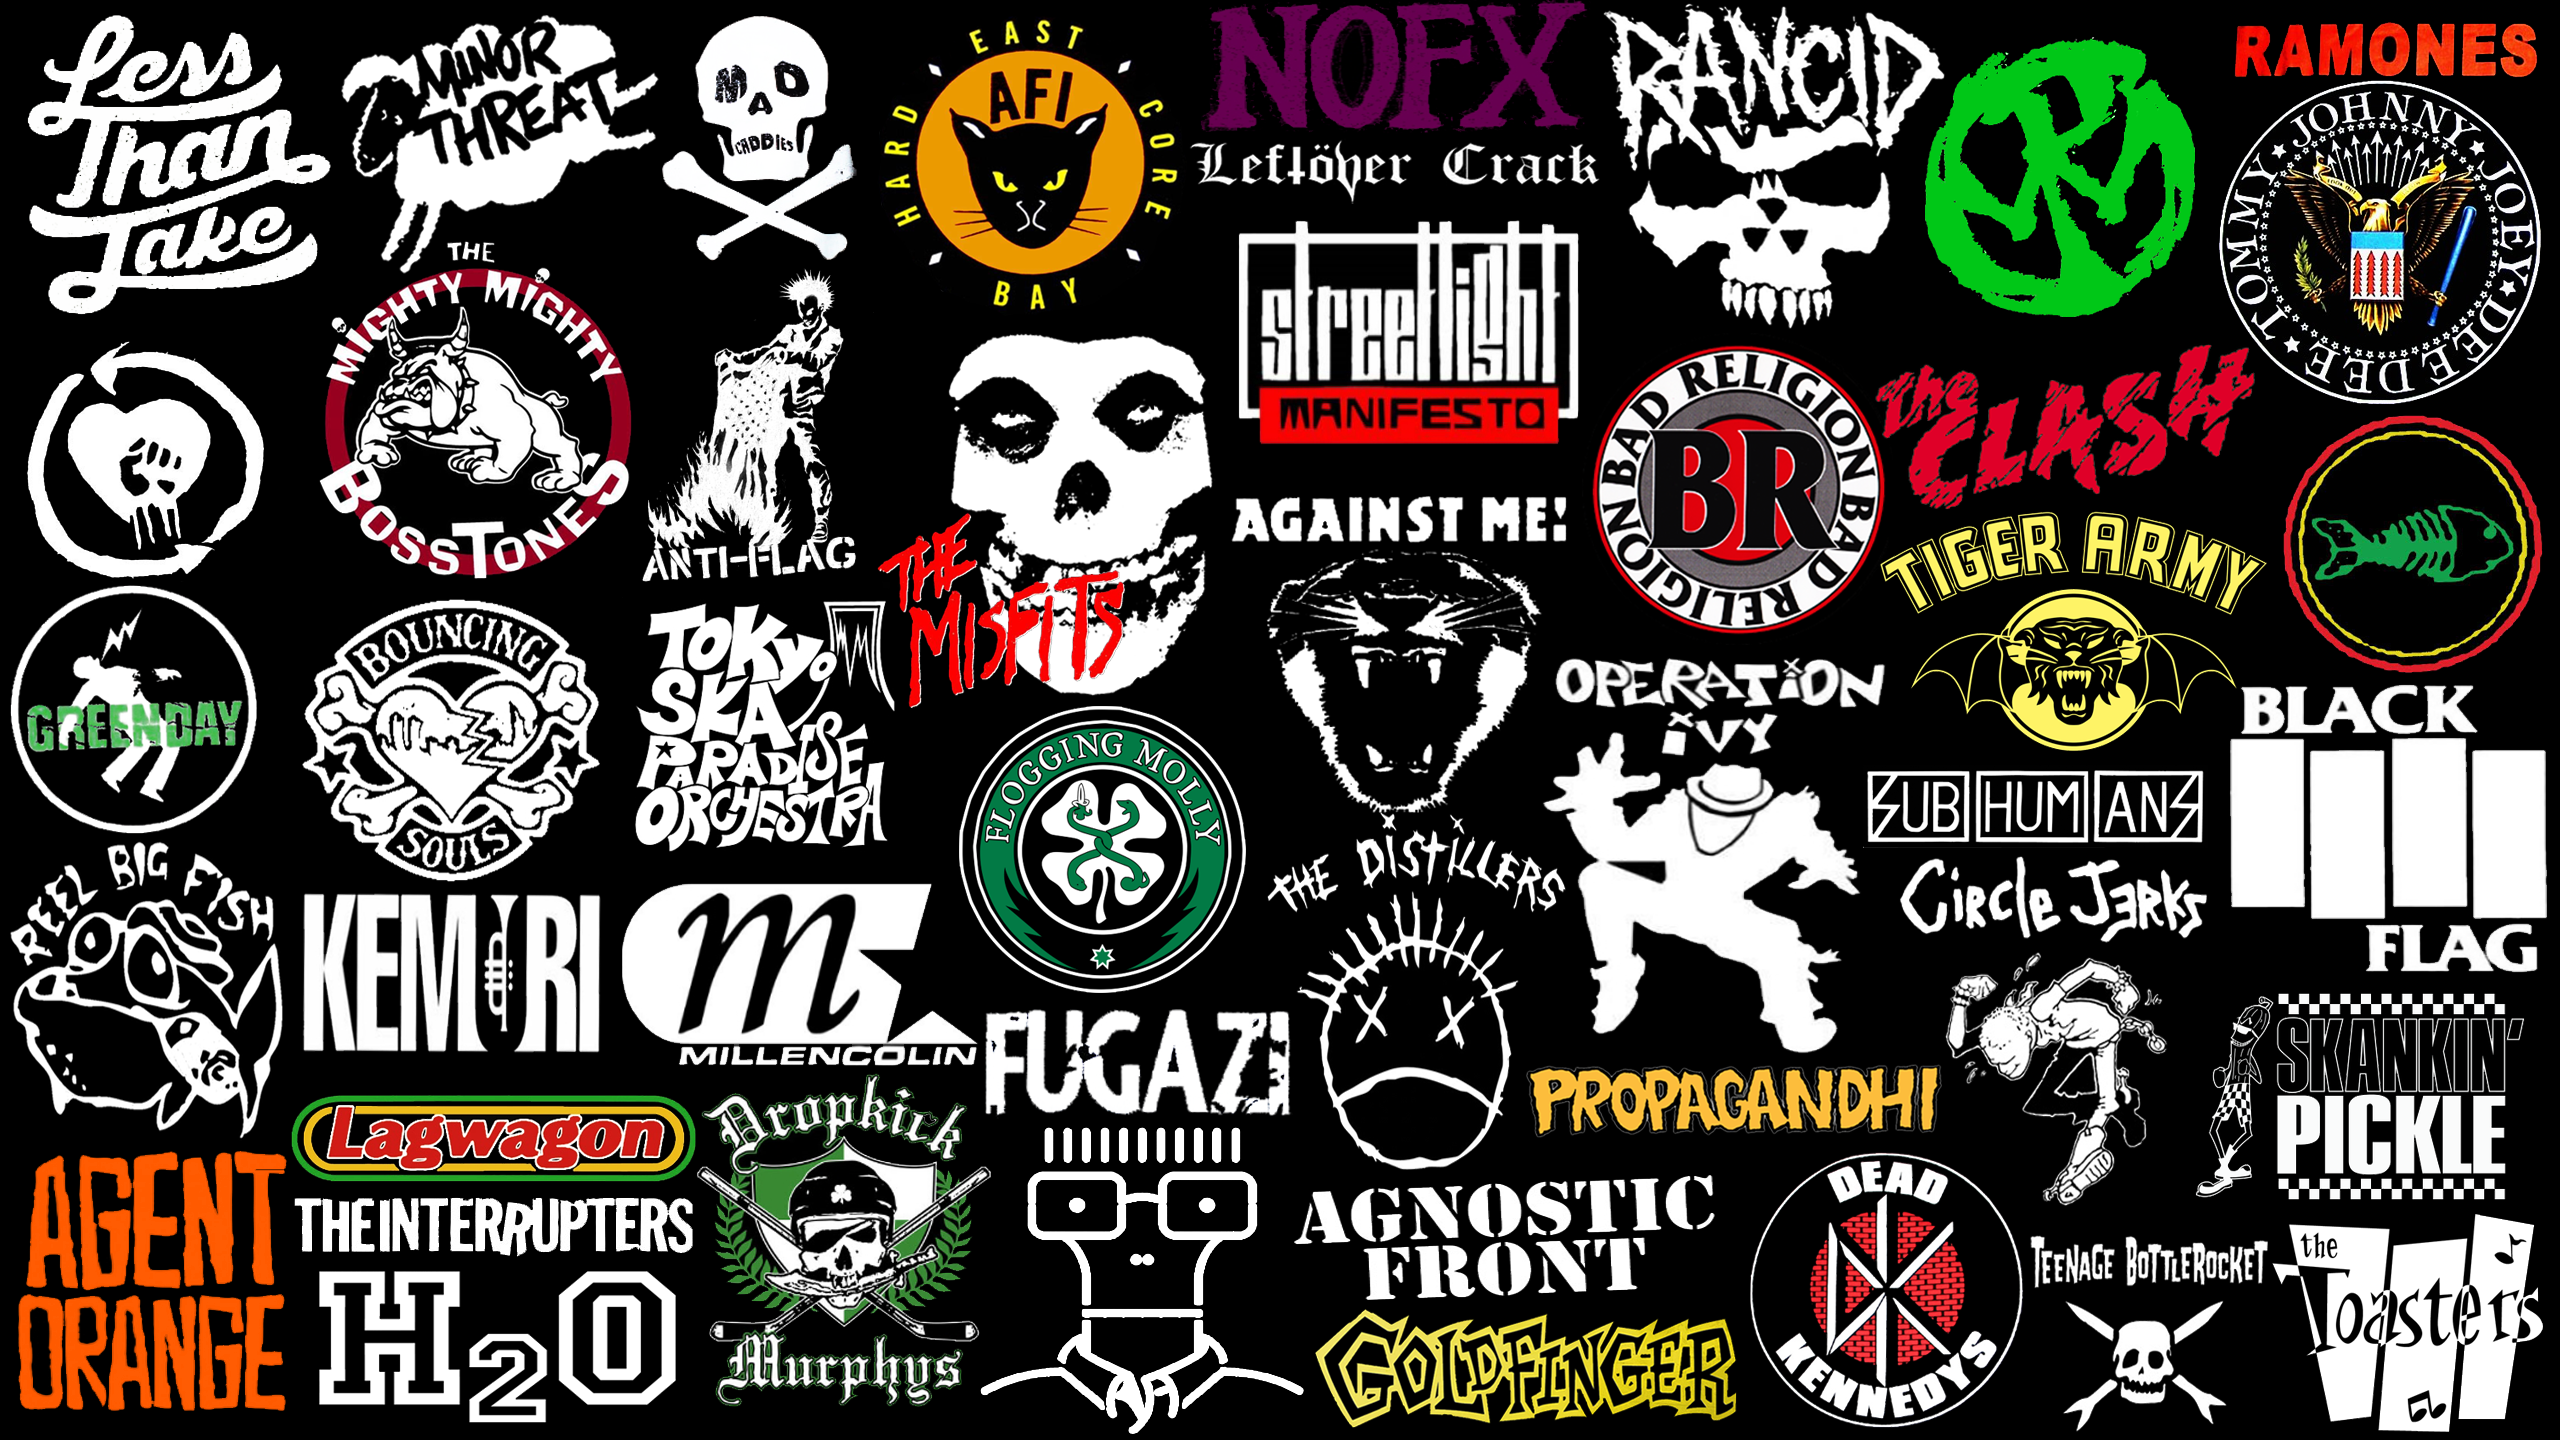 Punk Rock Music Bad Religion Dead Kennedys Band Logo Descendents Minor Threat Ramones The Clash Stre 2560x1440